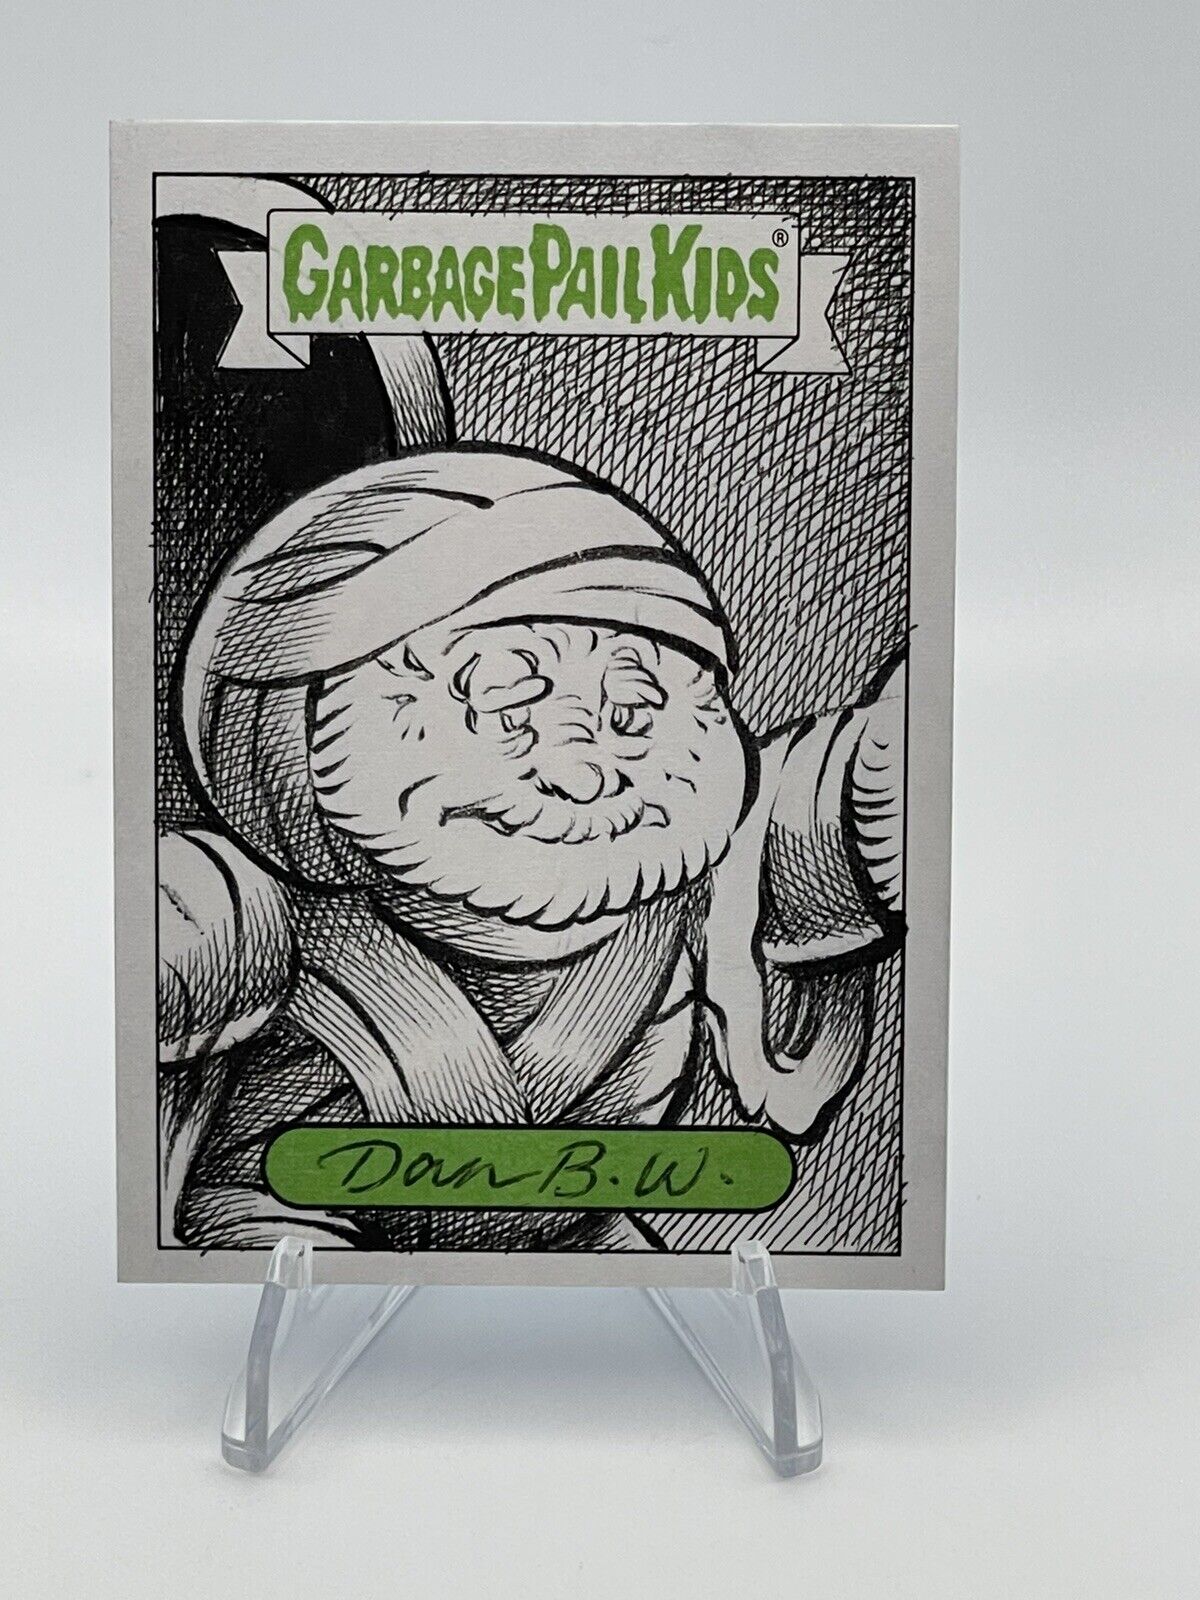 2019 Topps Garbage Pail Kids Dan B.W. Sketch Card 1/1 - WHT90s - Wrappin’ Ruth